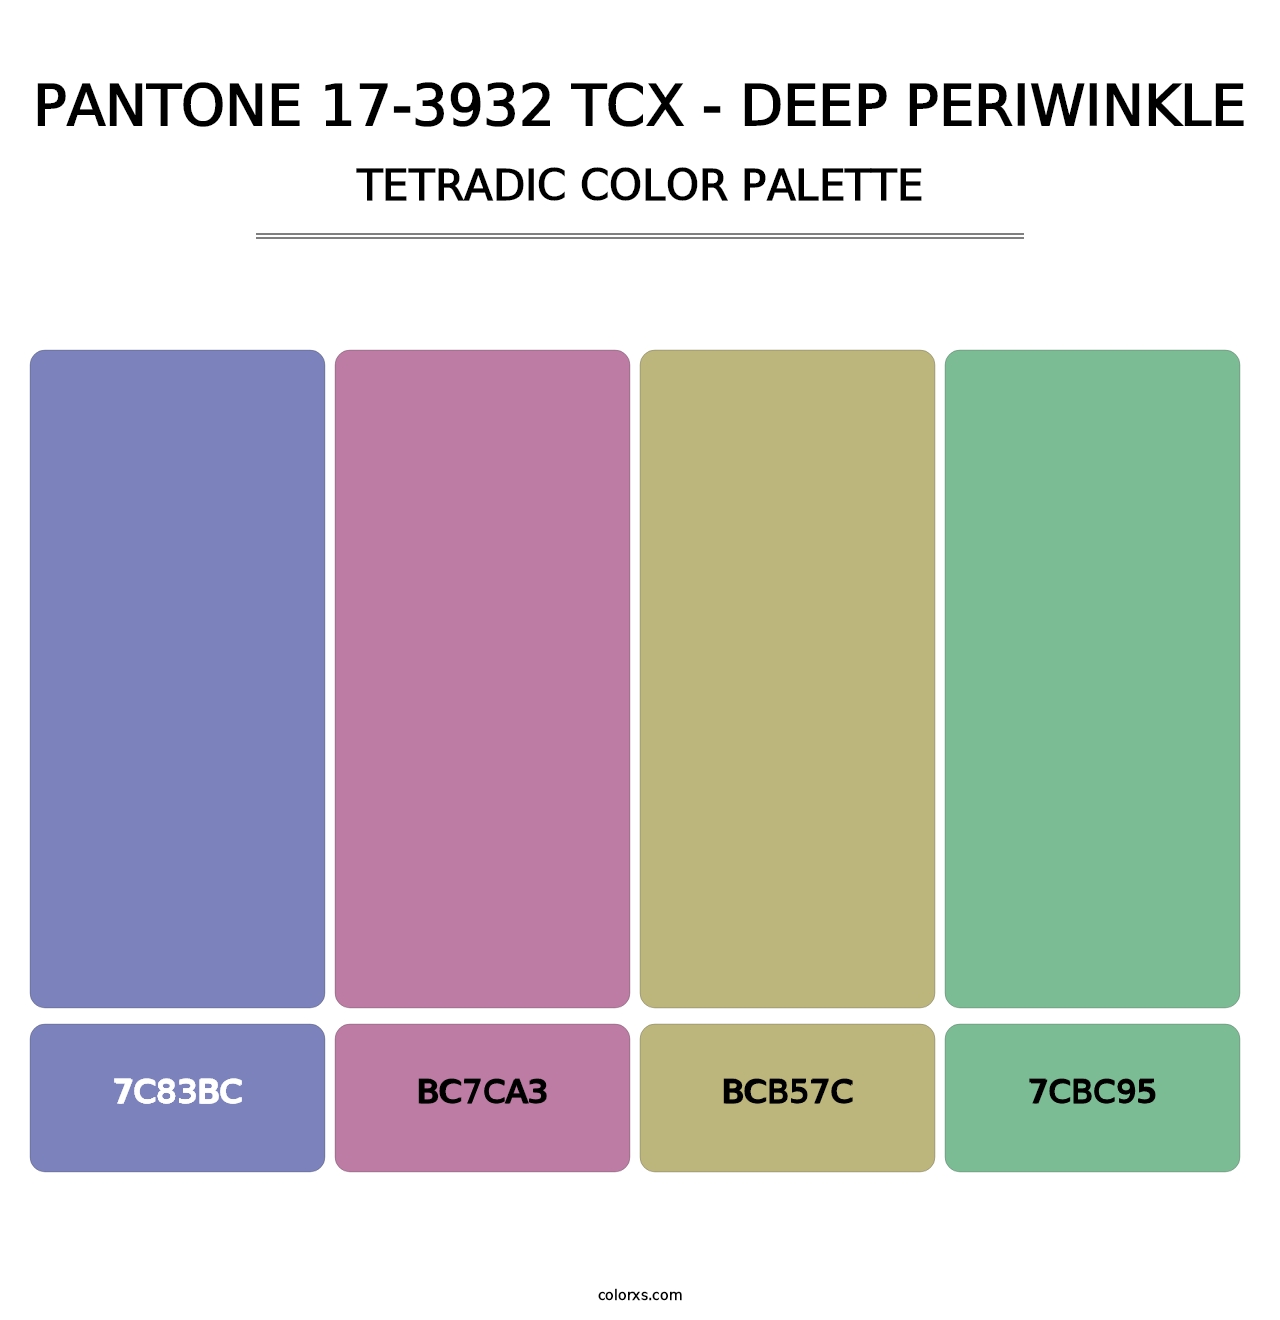 PANTONE 17-3932 TCX - Deep Periwinkle - Tetradic Color Palette